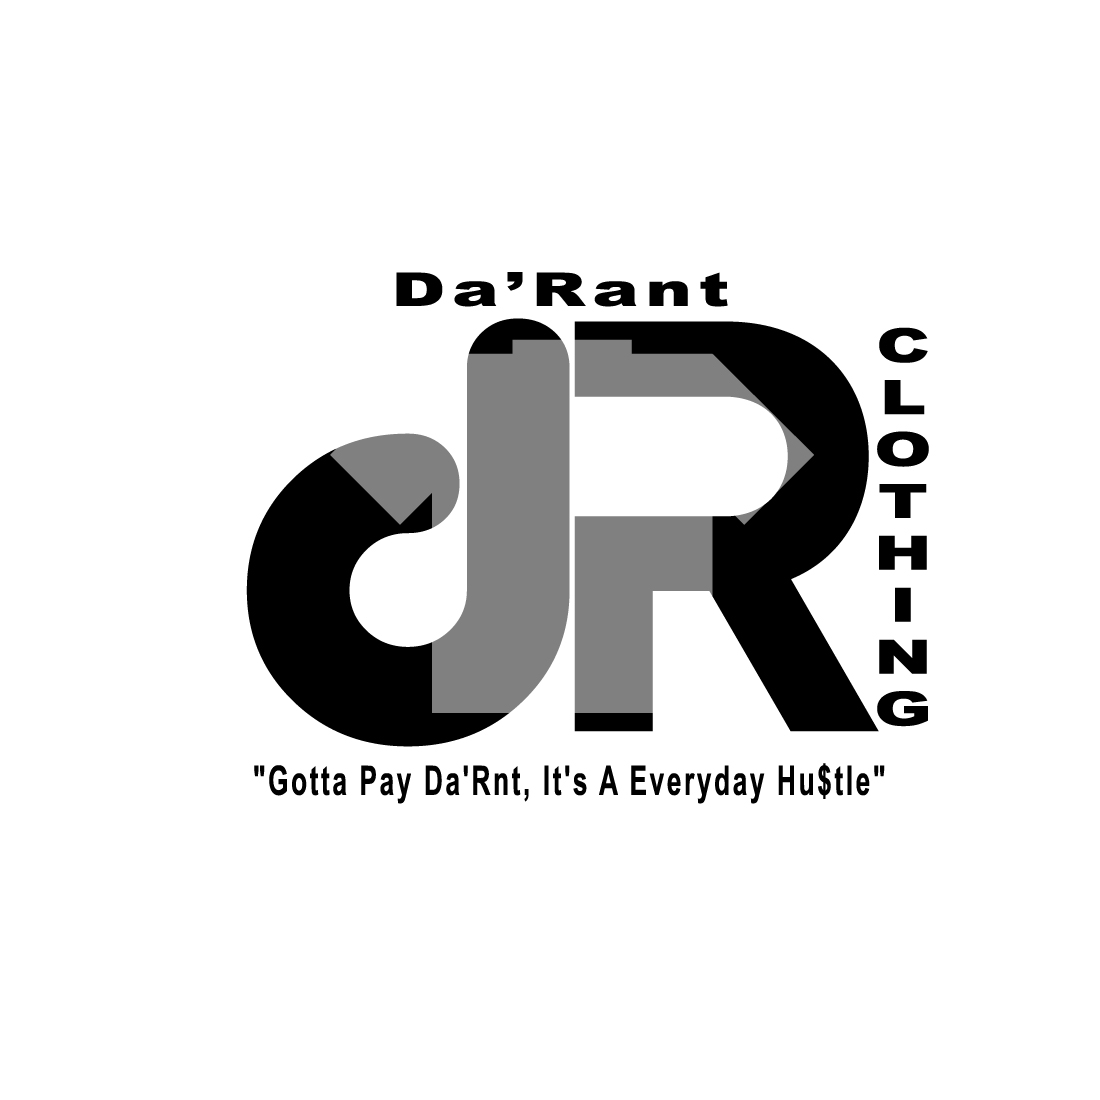 Da - Rant Clothing - TShirt Print Design cover image.